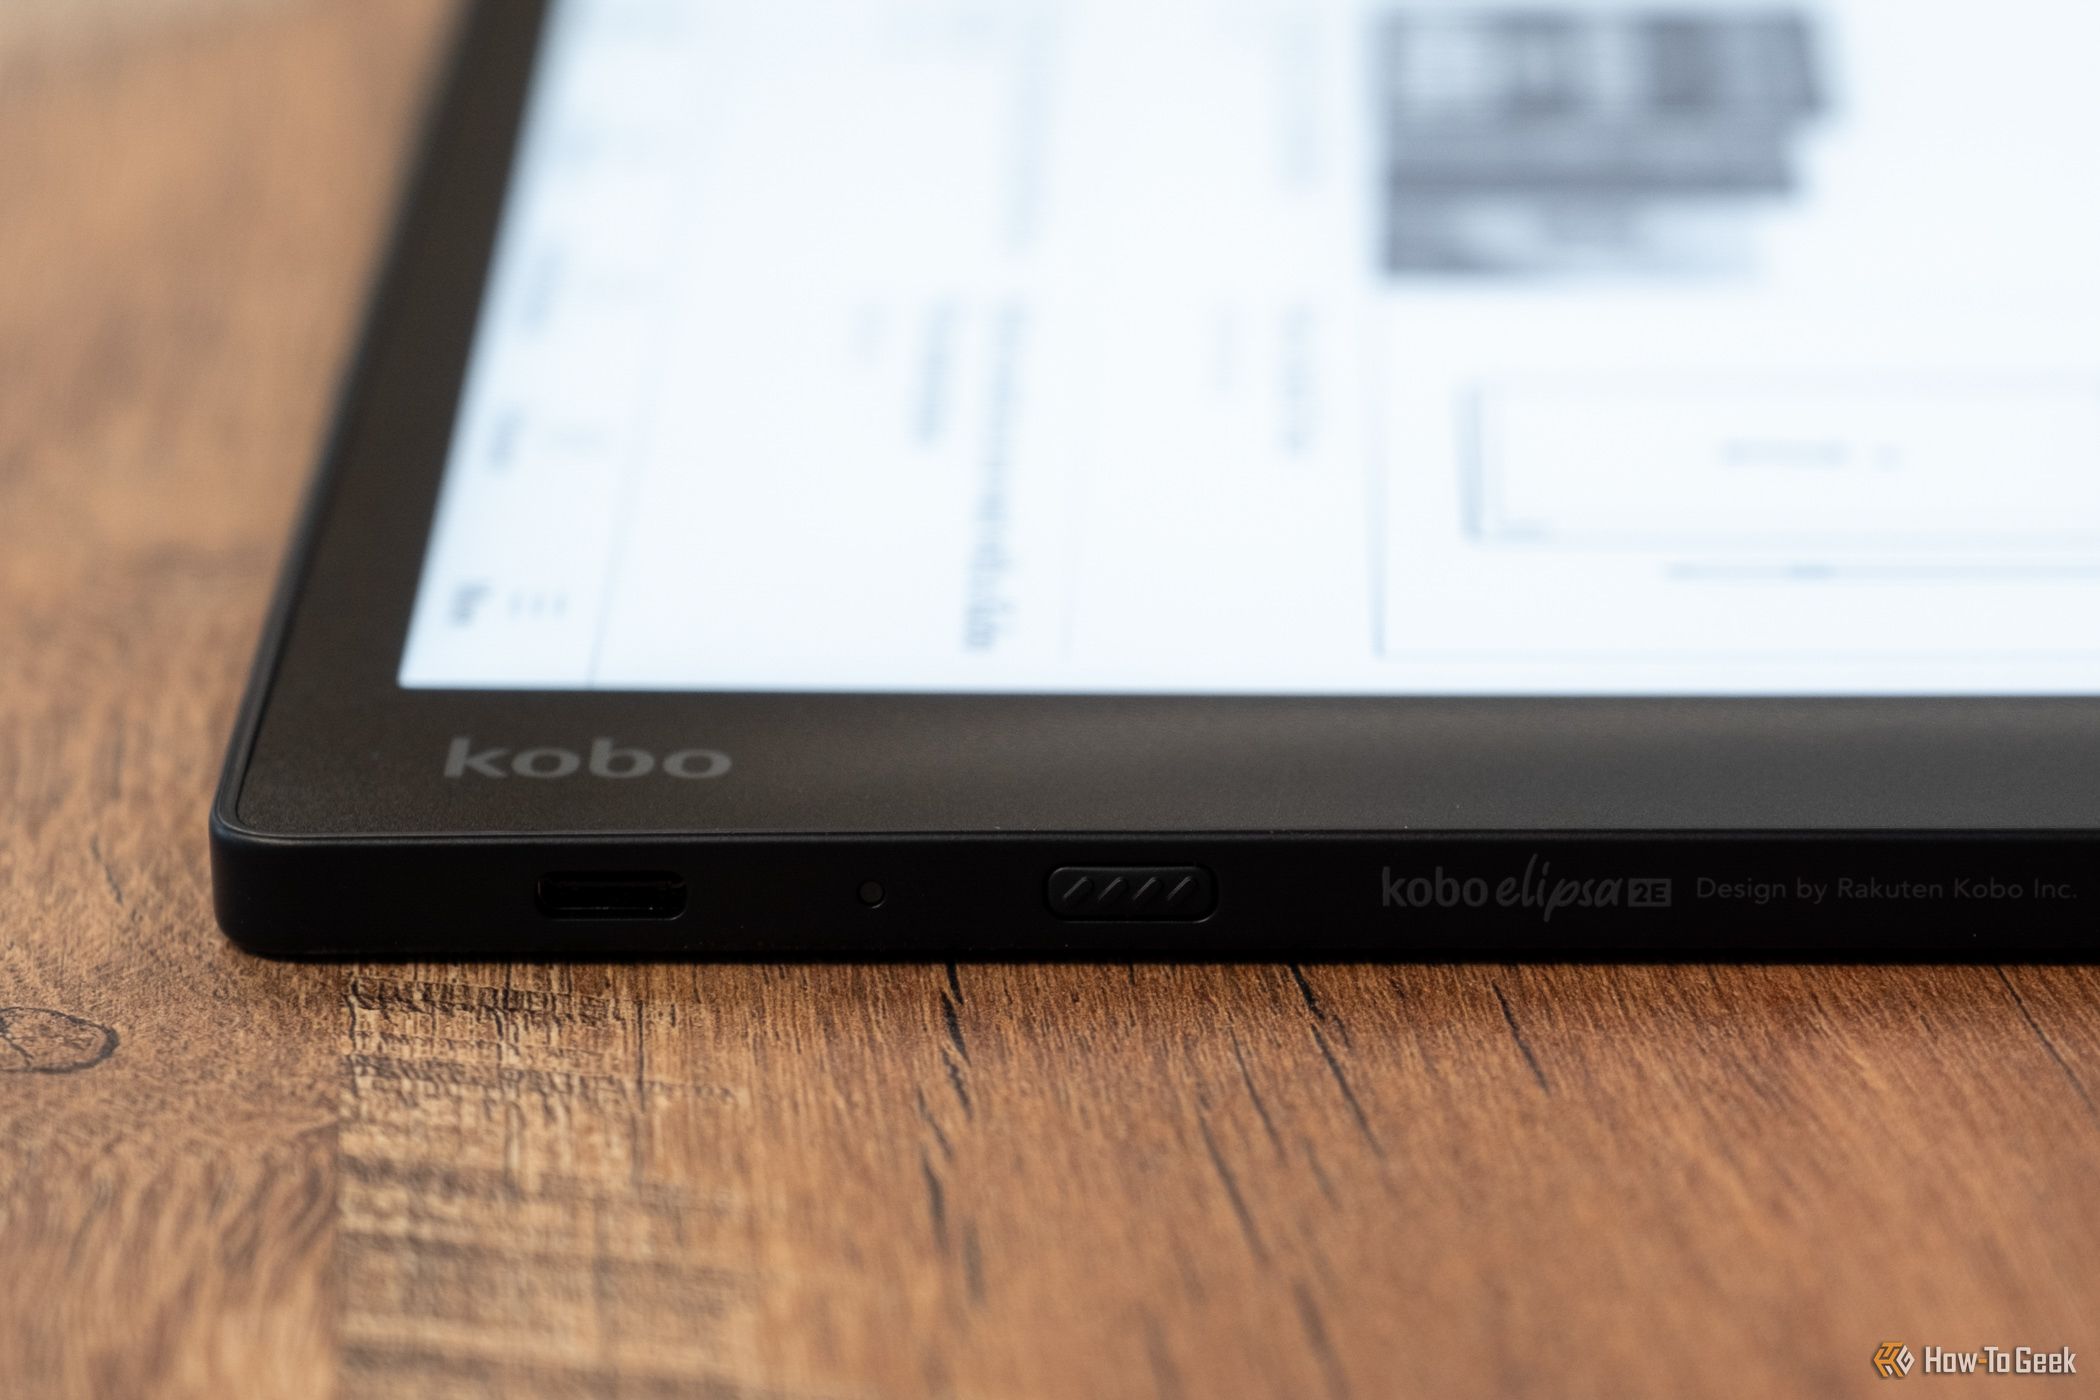 Rakuten Kobo Elipsa 2E Review: An eReader and Smart Notebook Combination